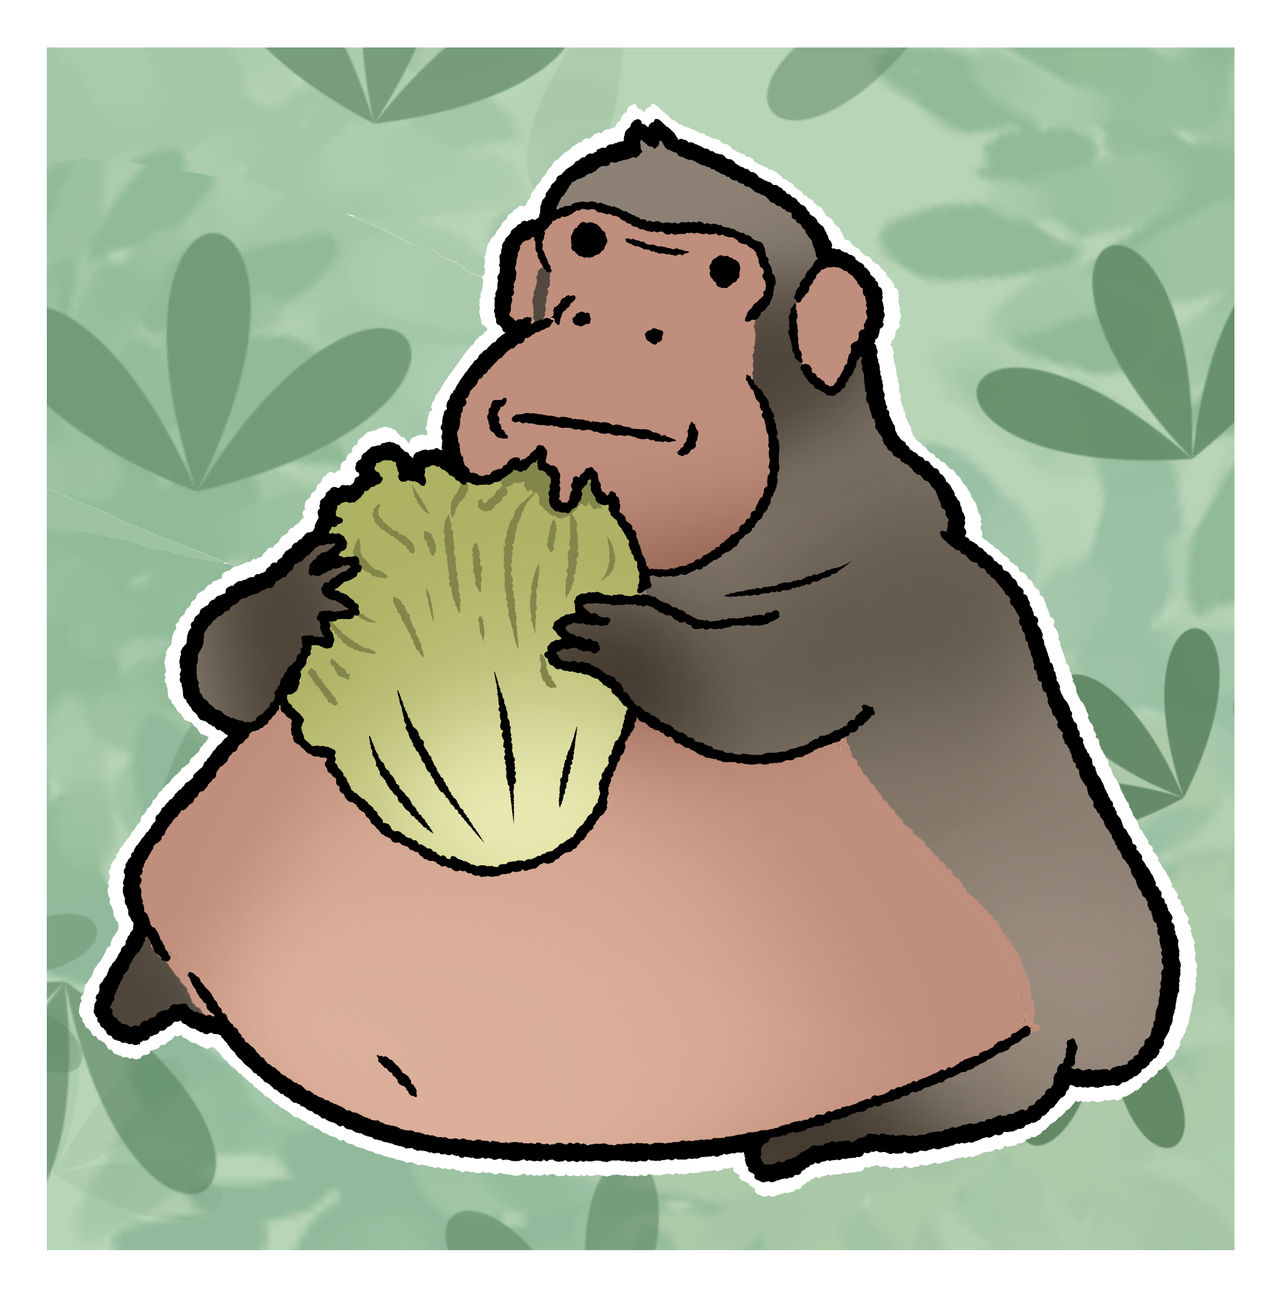 Stupid Fat monkey by SomthingCanvas on DeviantArt